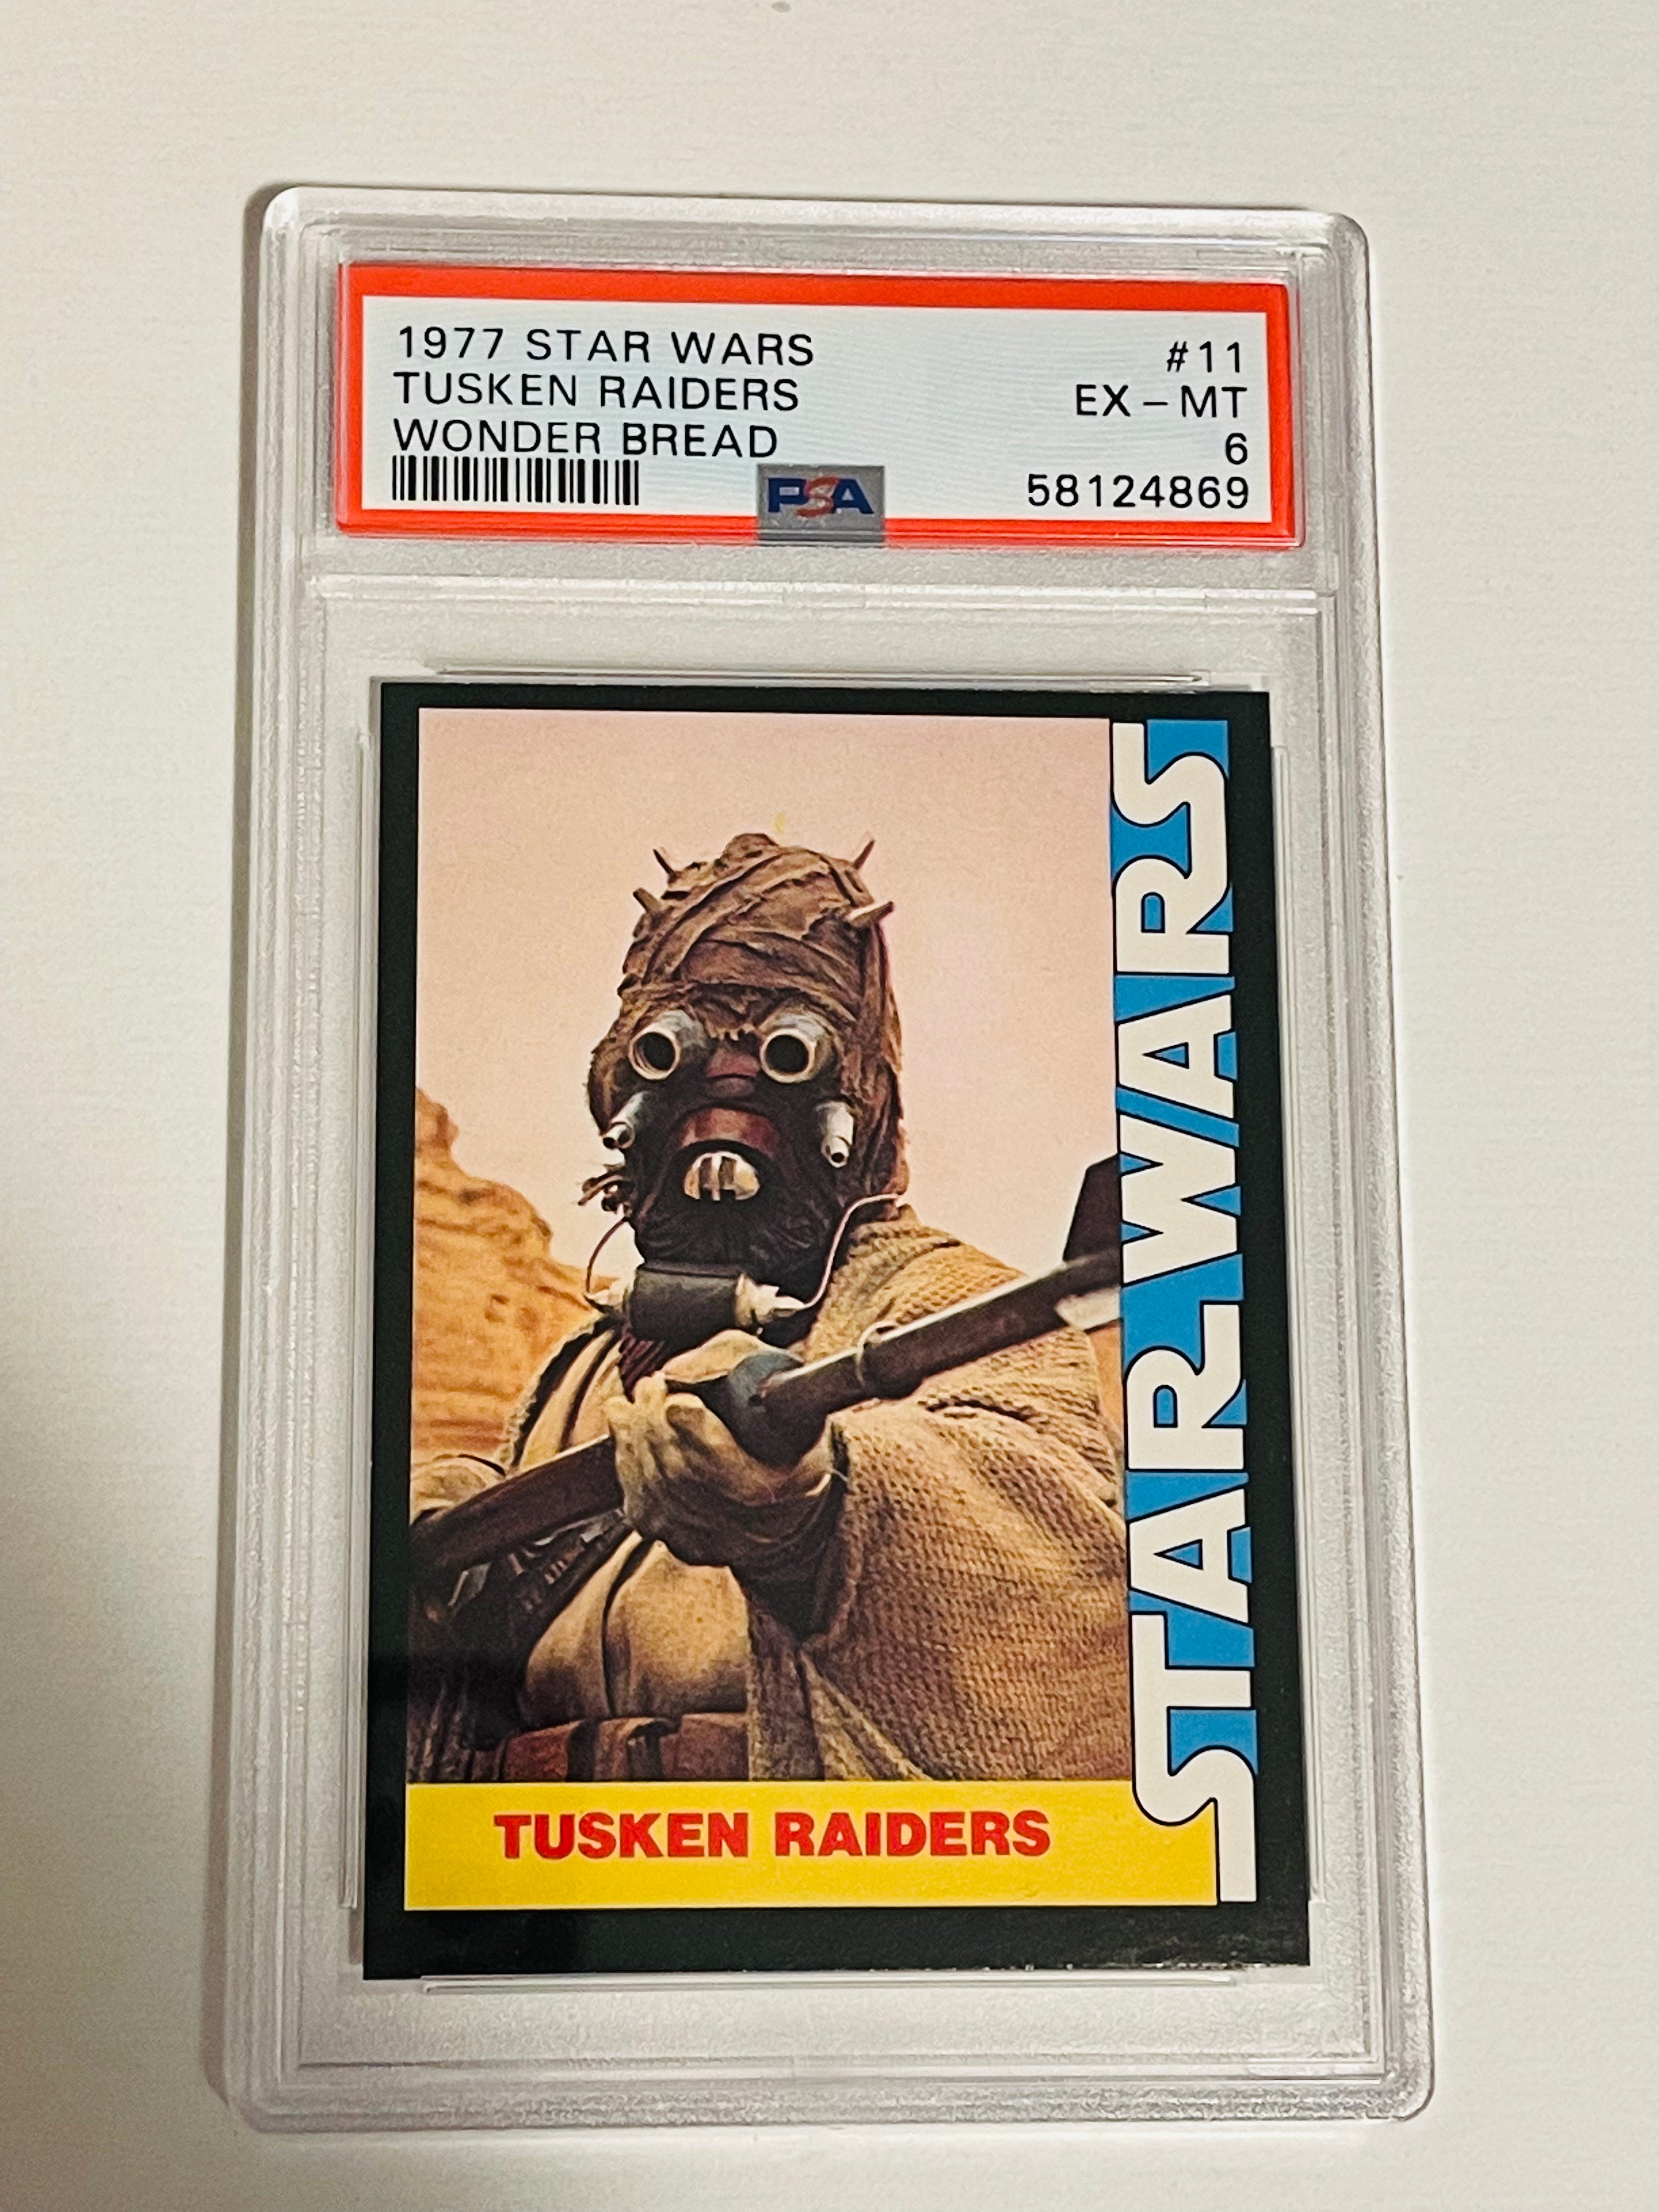 Star Wars Wonder Bread Tusken Raiders PSA 6 graded card 1977